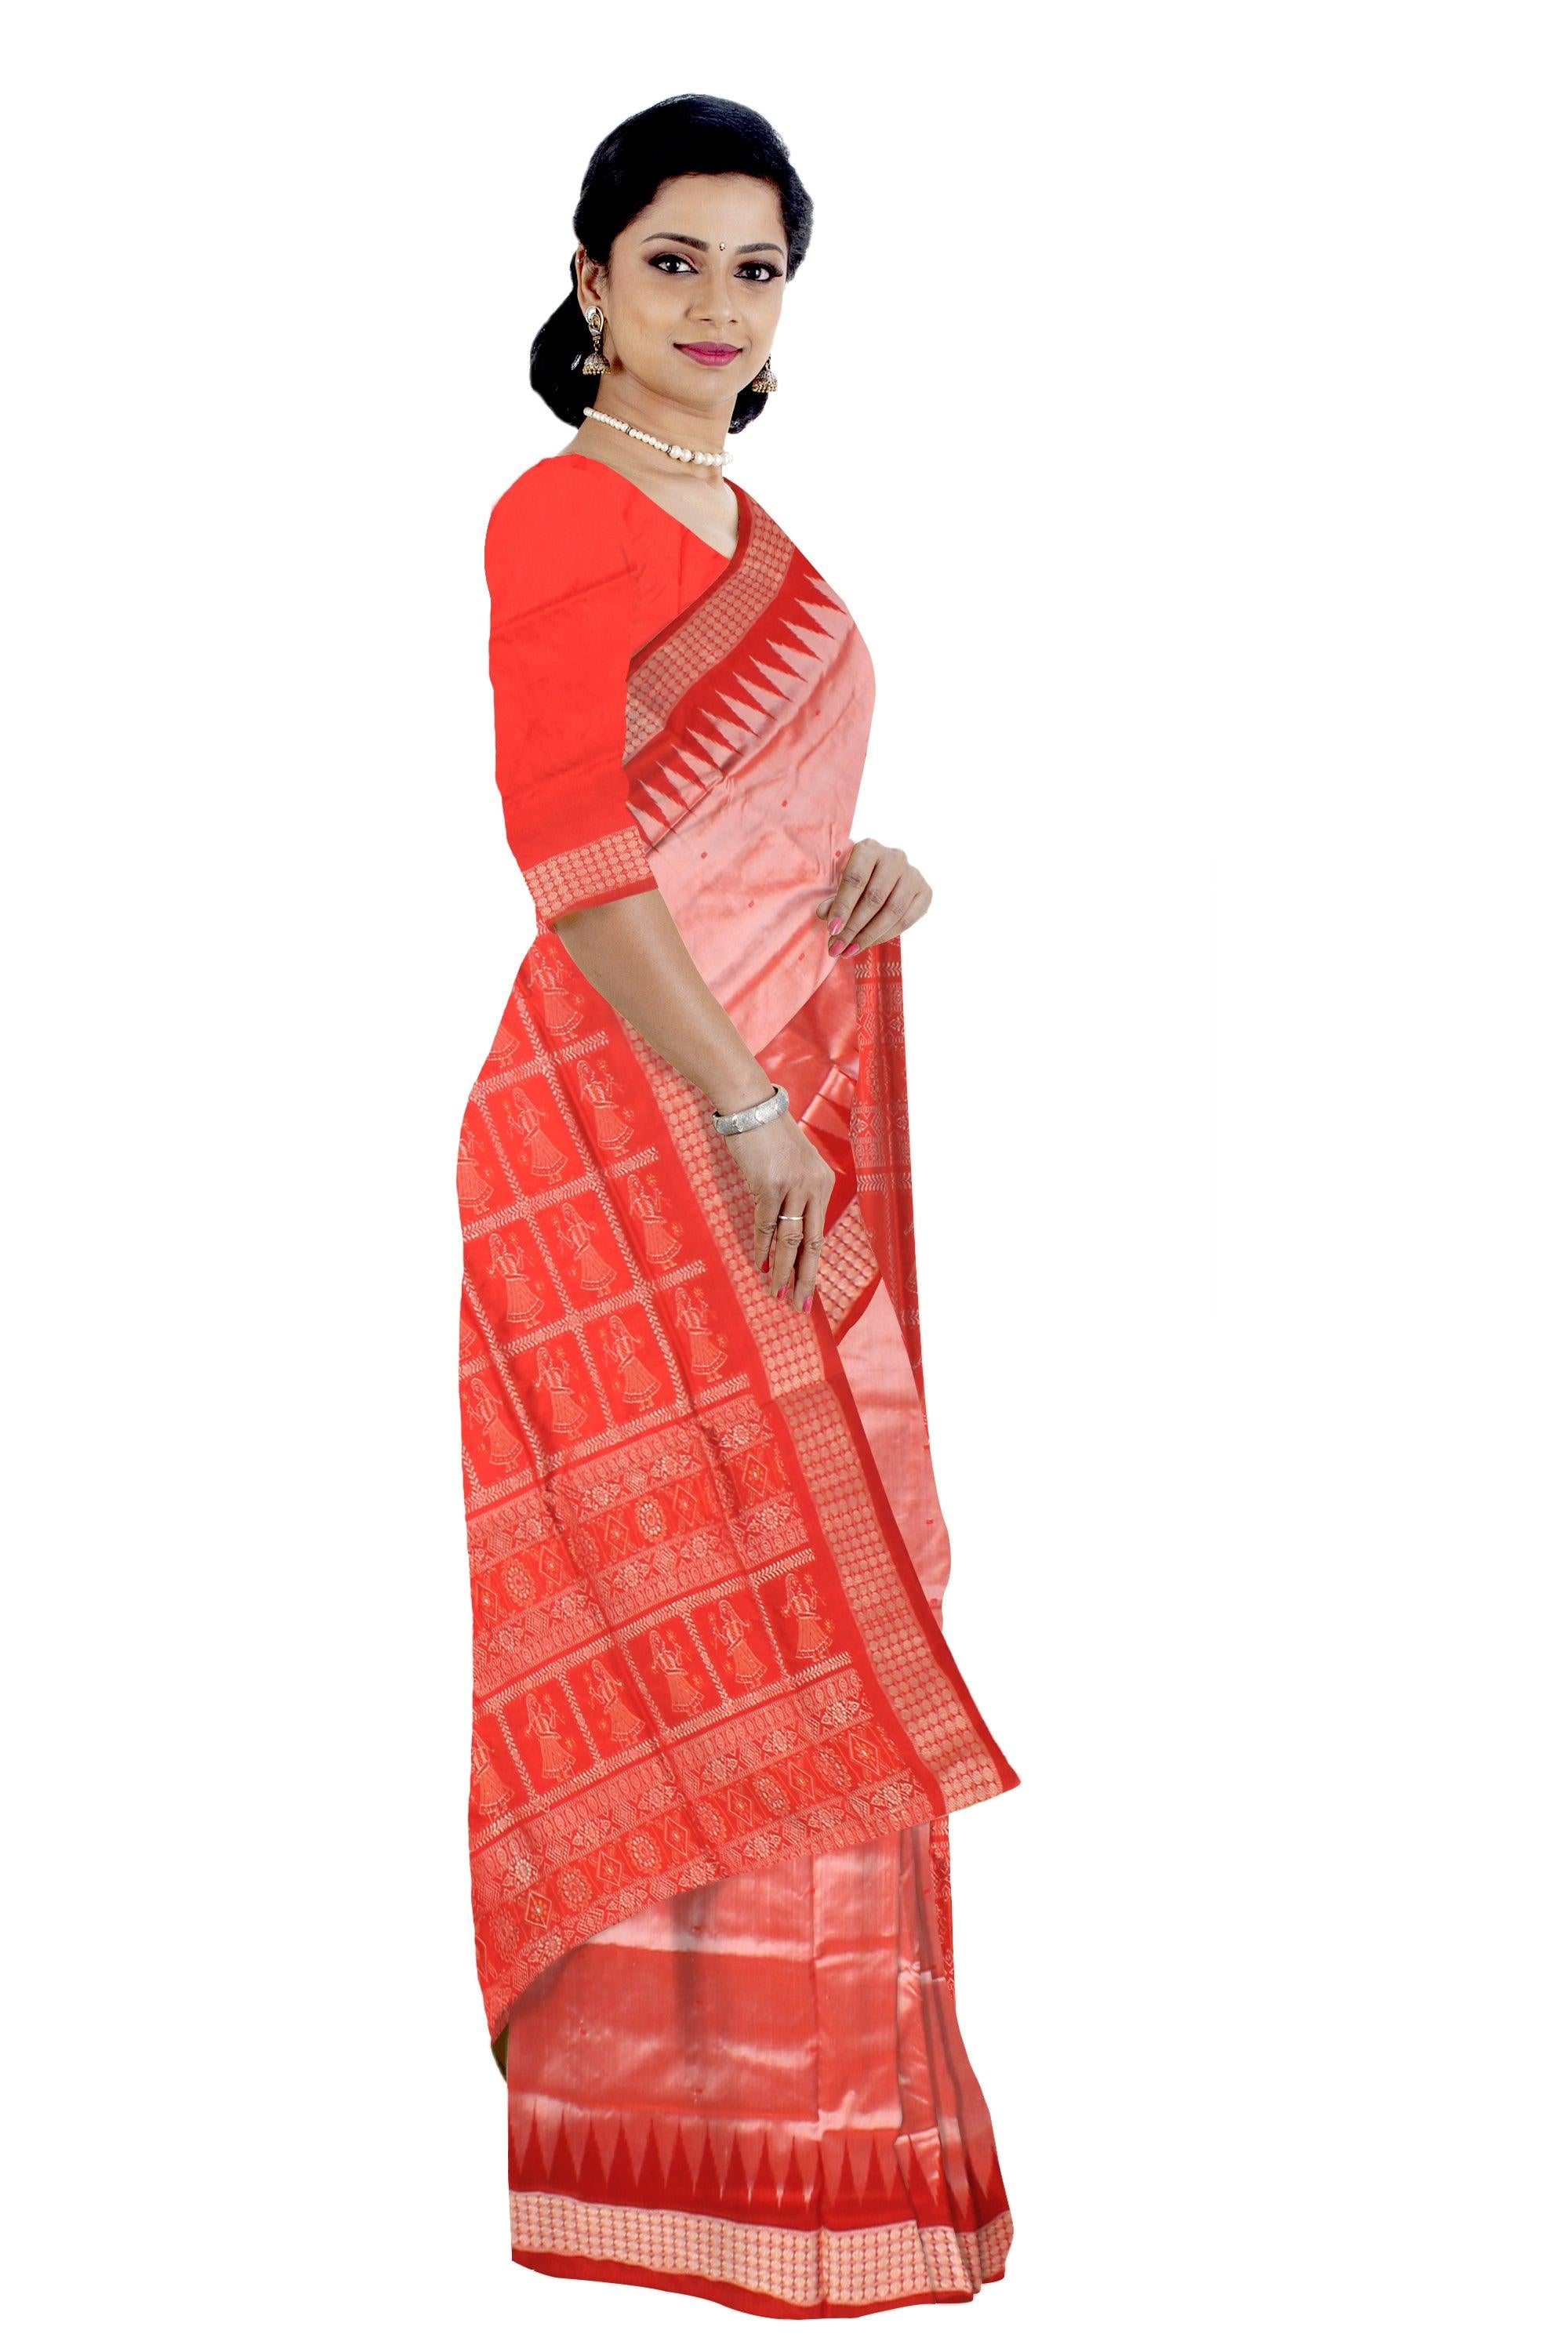 Booty design Sambalpuri  bomkei Pata saree in  Light Orange colour with blouse. - Koshali Arts & Crafts Enterprise